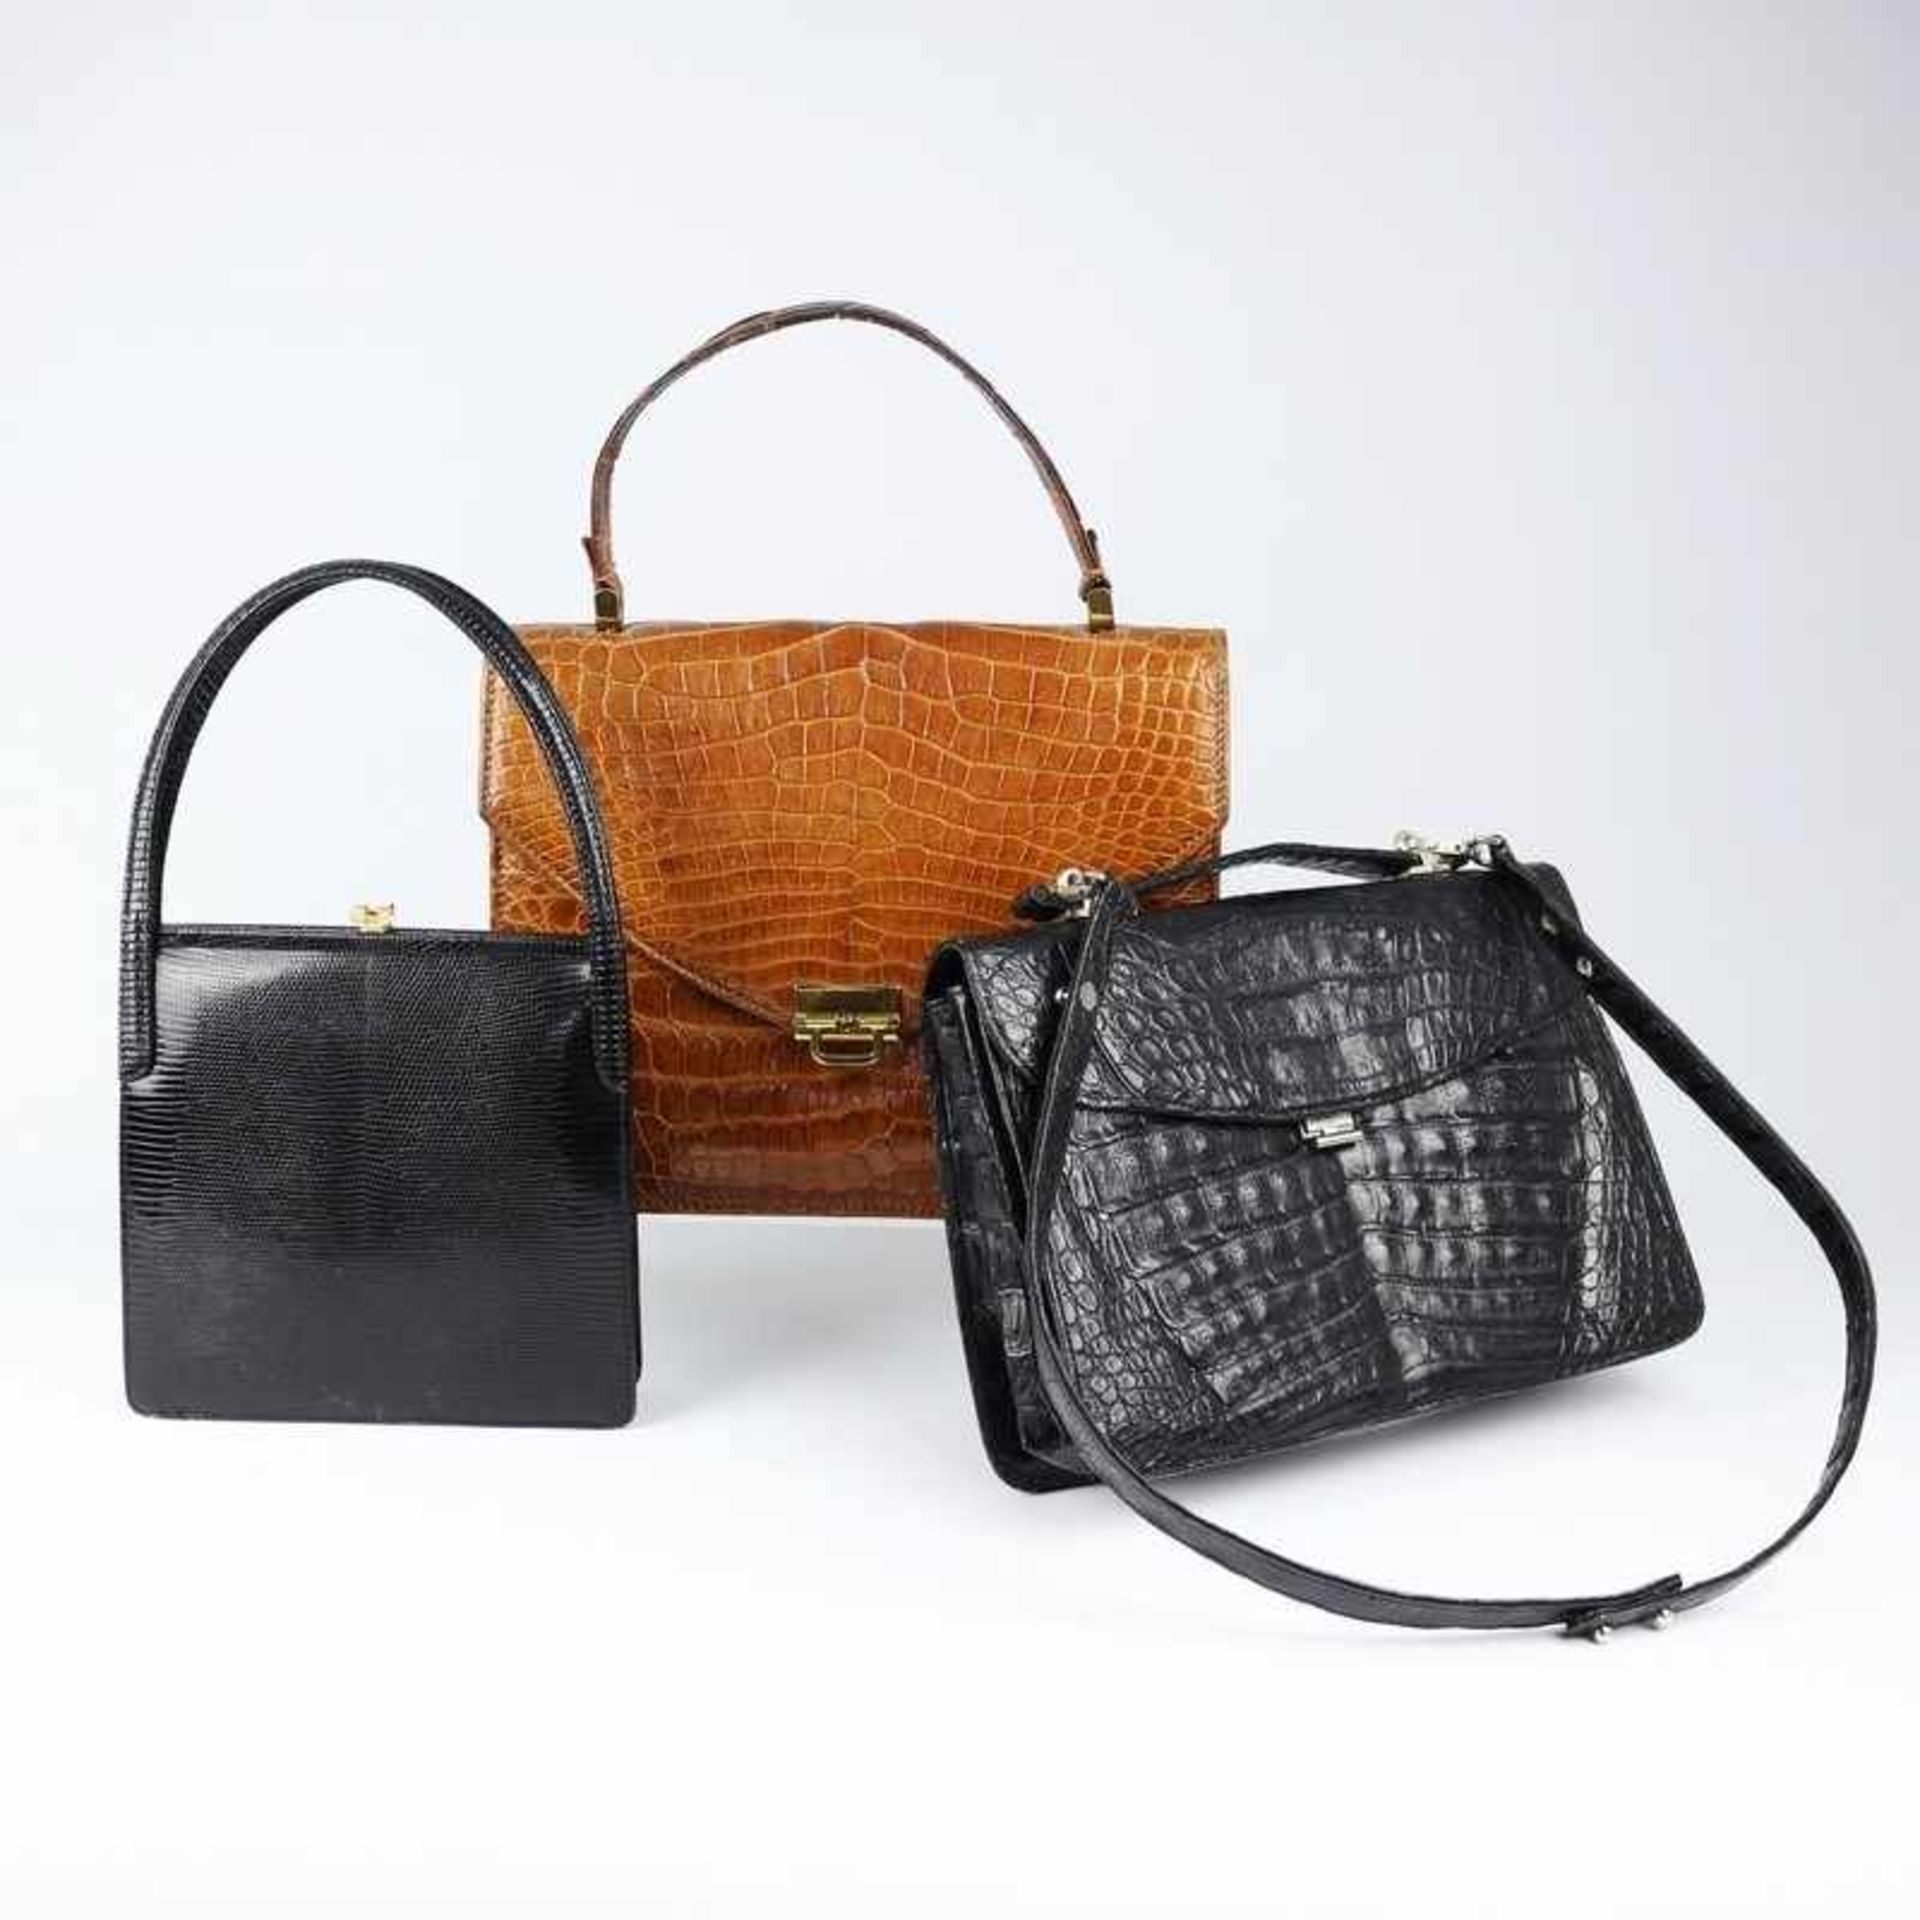 Damenhandtaschen - Drei Stück 2x Krokooptik, schwarzes u. braunes Leder, versch. Ausführungen, 1x